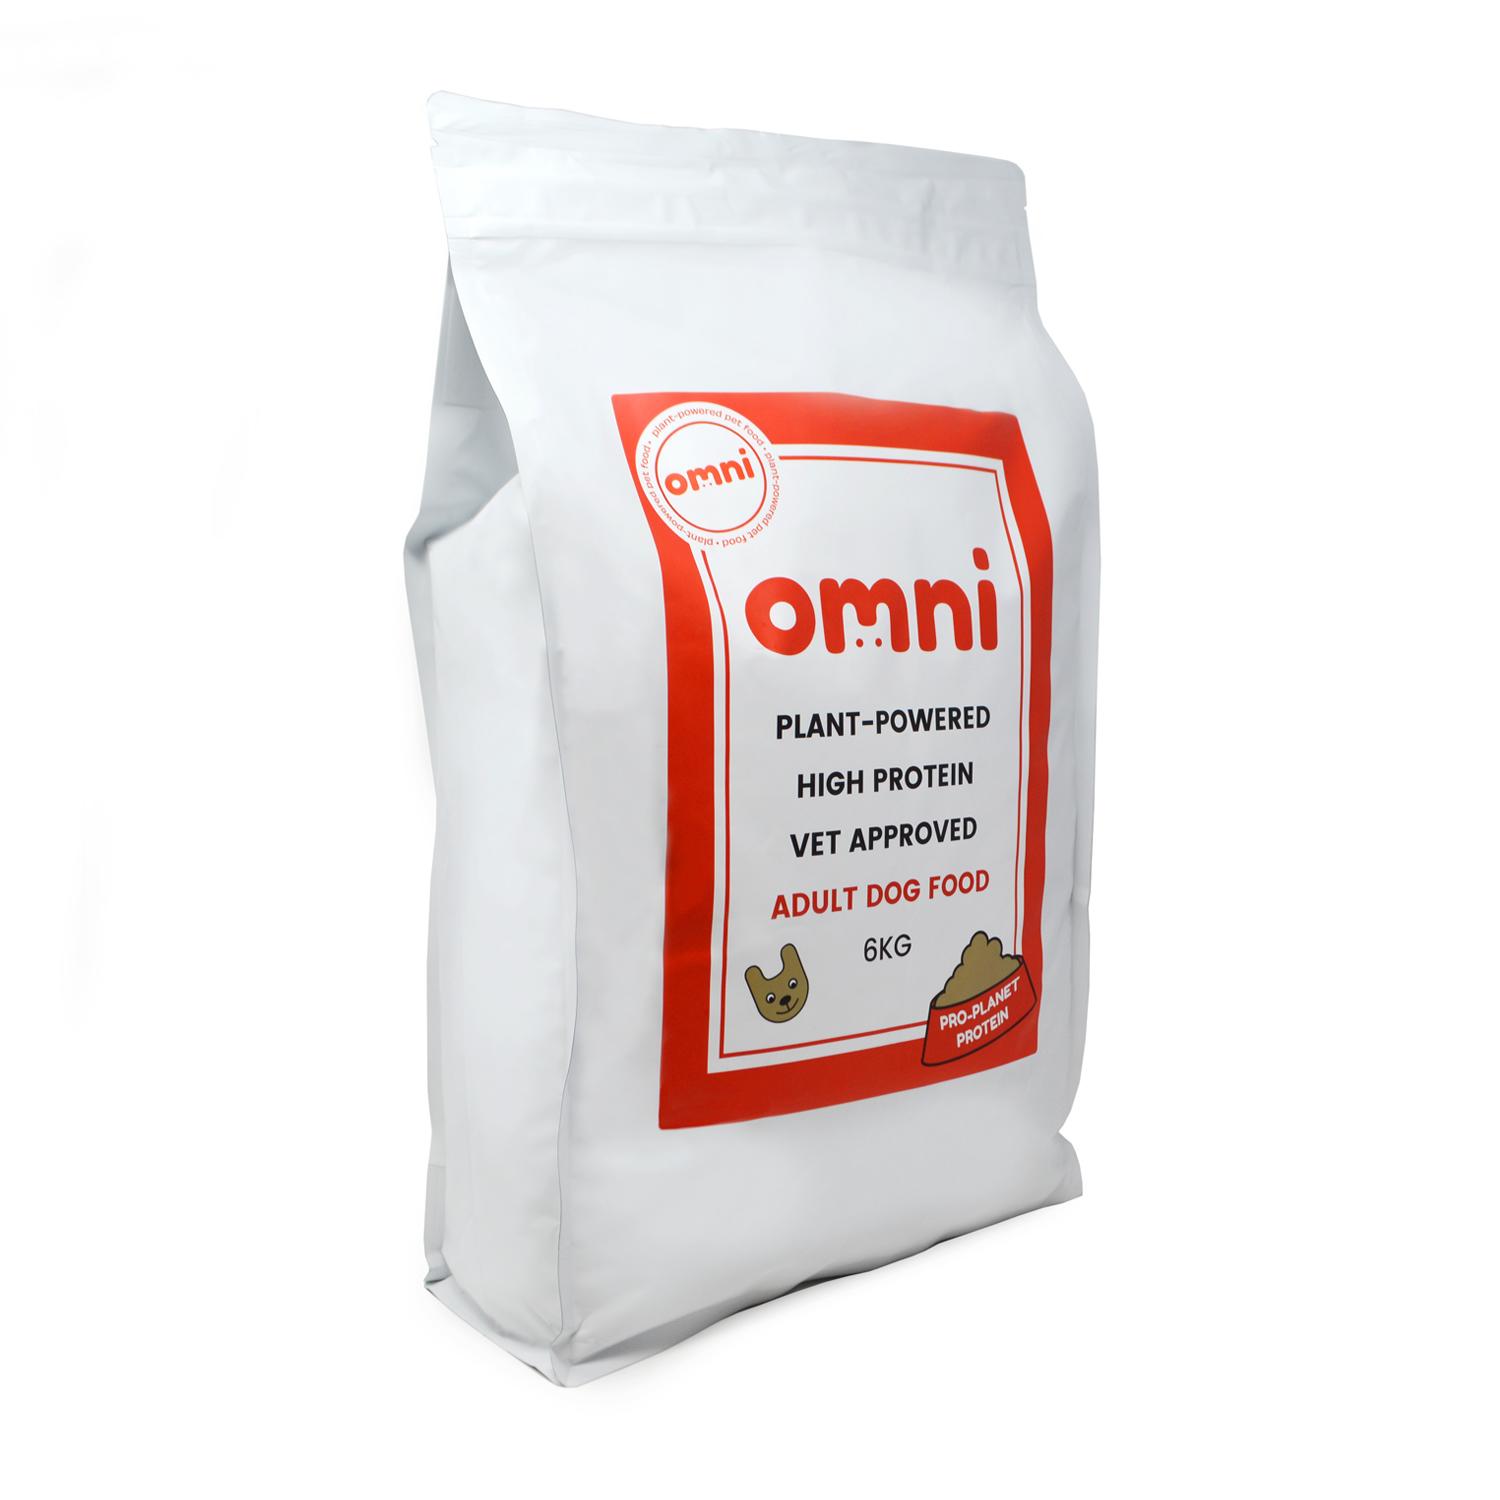 And angled 6kg bag of Omni Complete Plant Based Dog Food